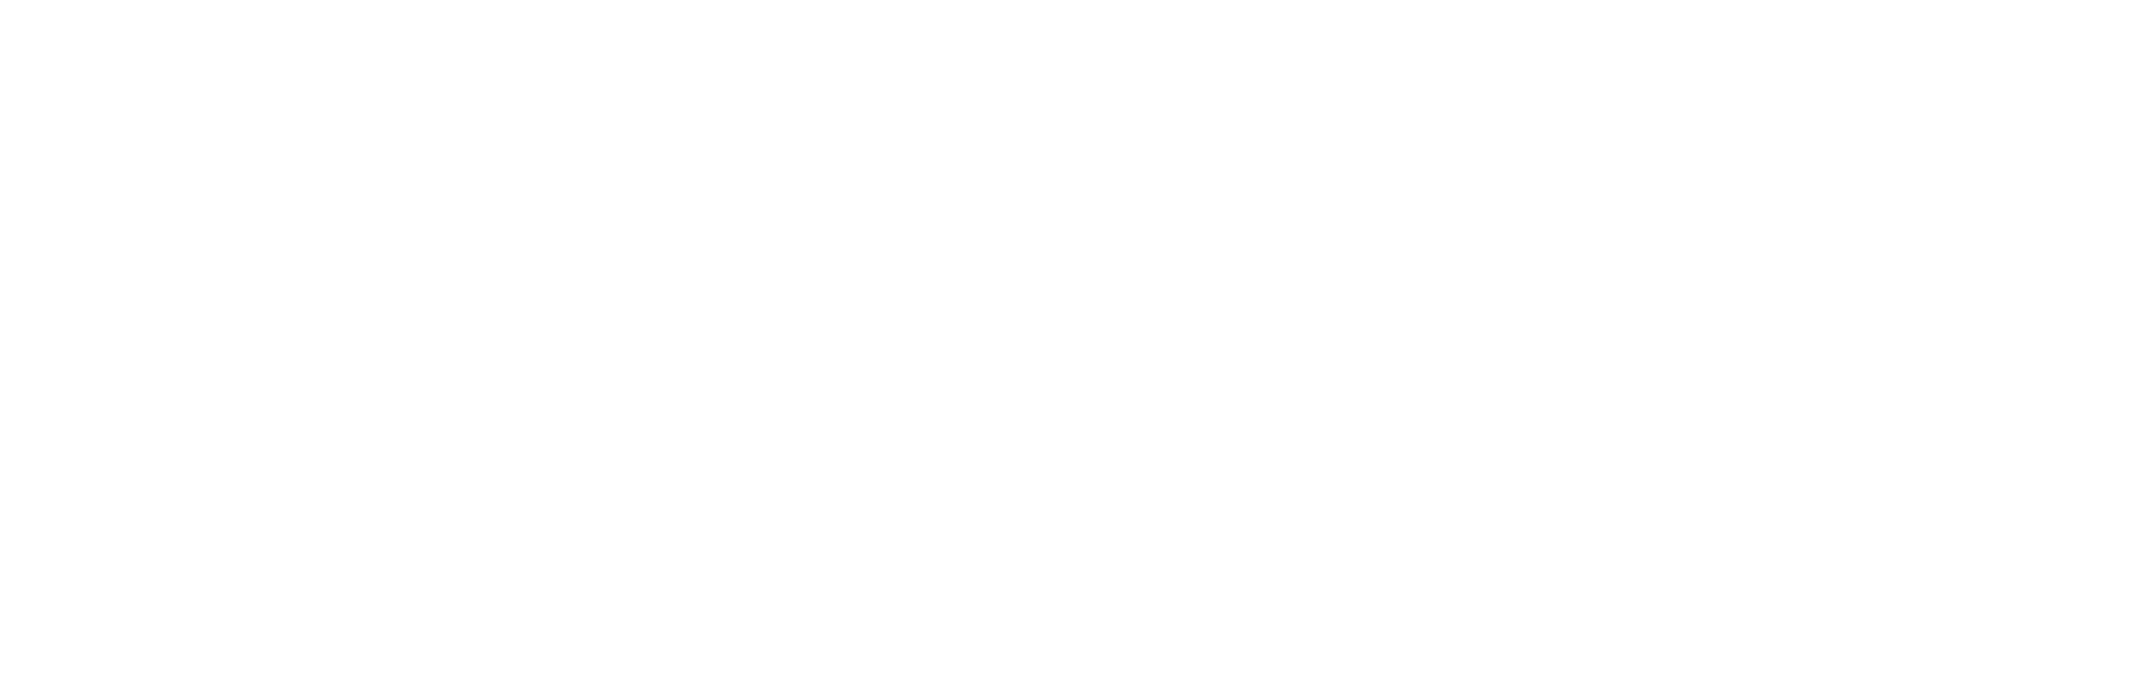 Multi partner trust fund logo